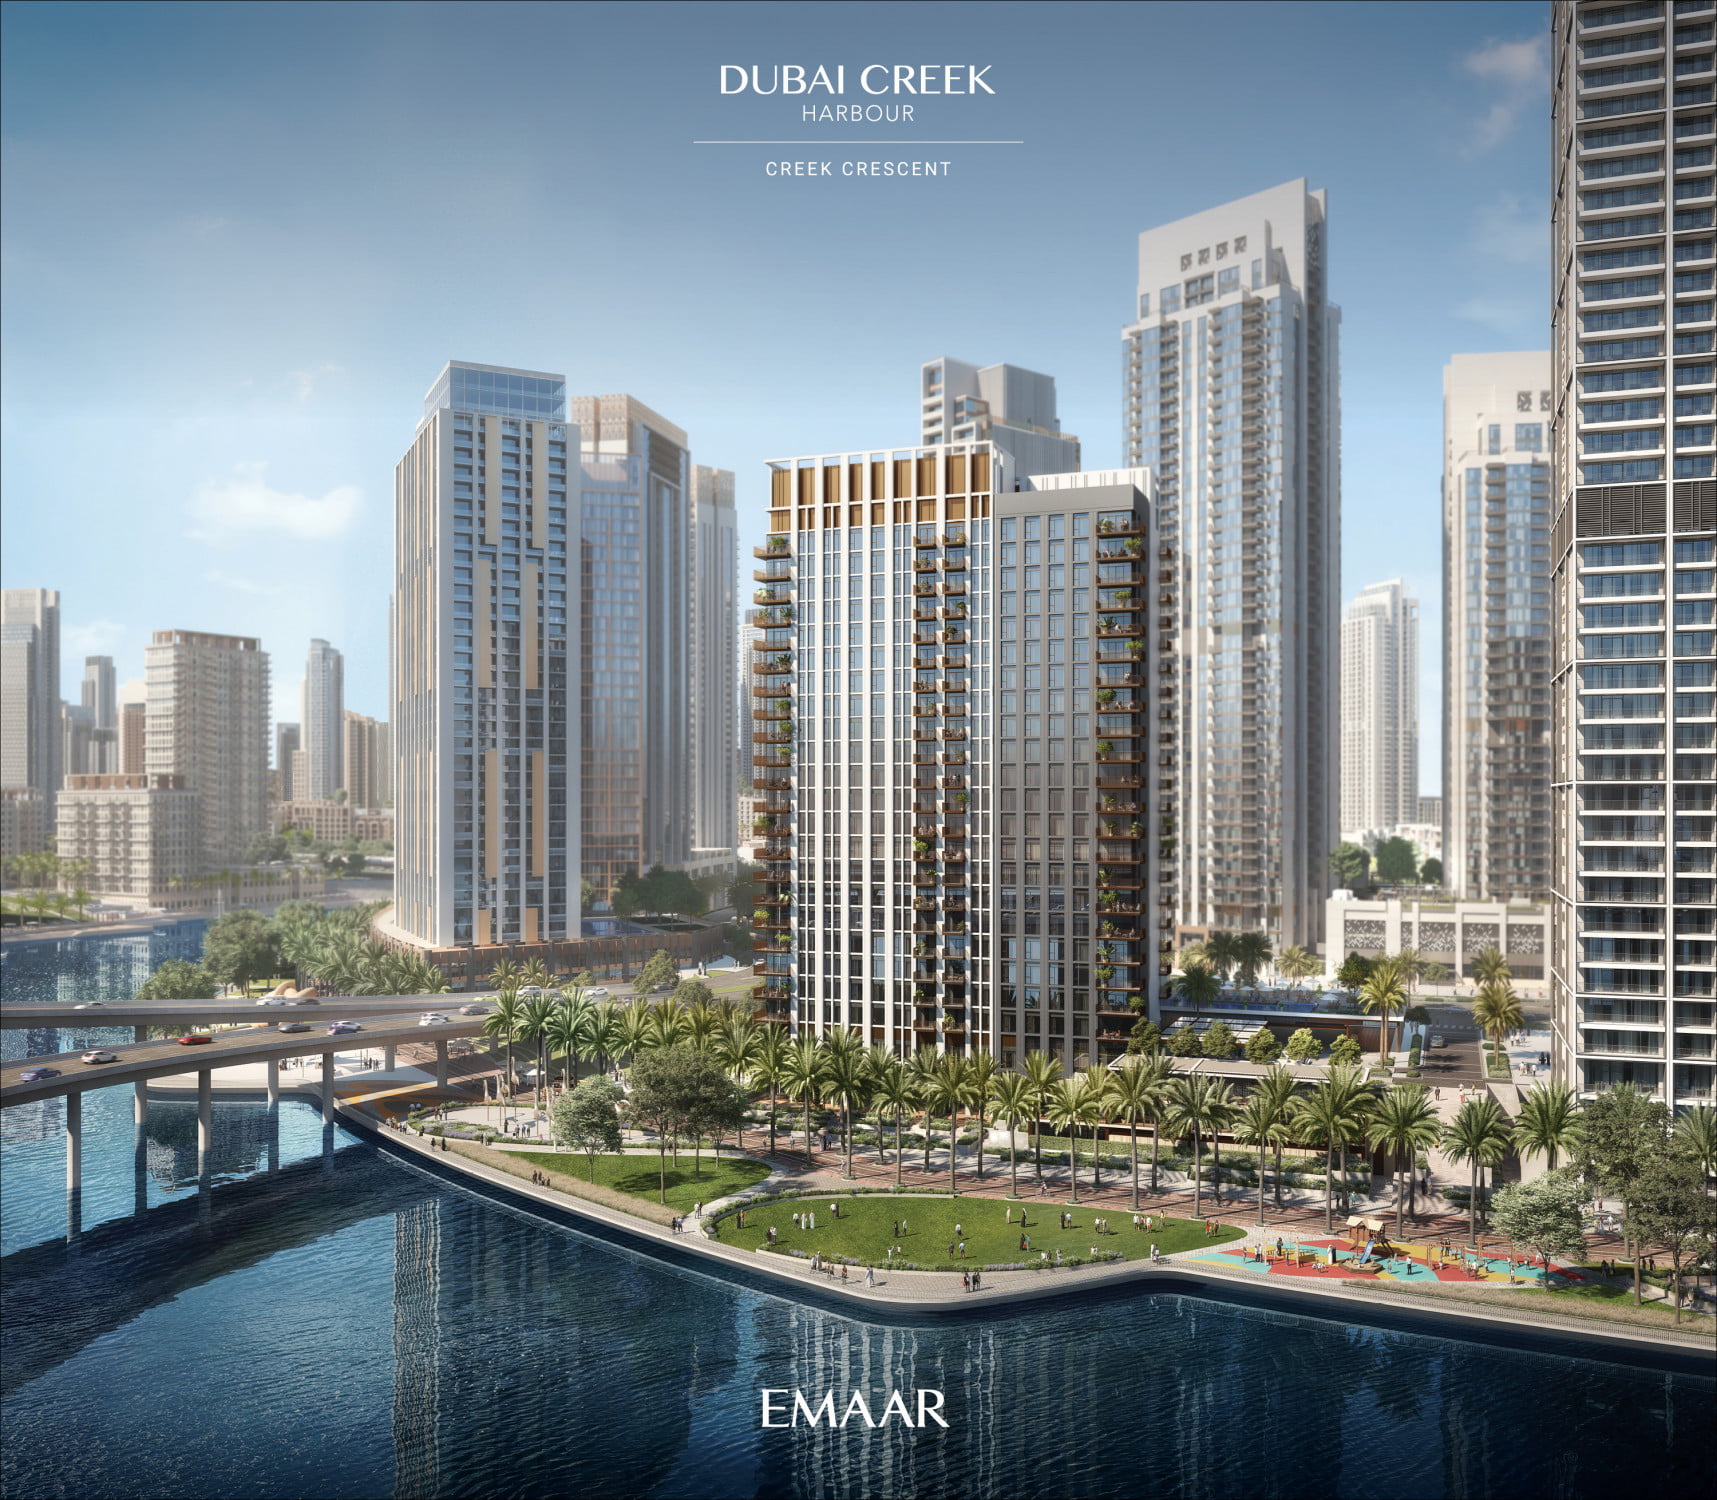 CREEK CRESCENT DUBAI CREEK HARBOUR 09 - Immobilier Dubai